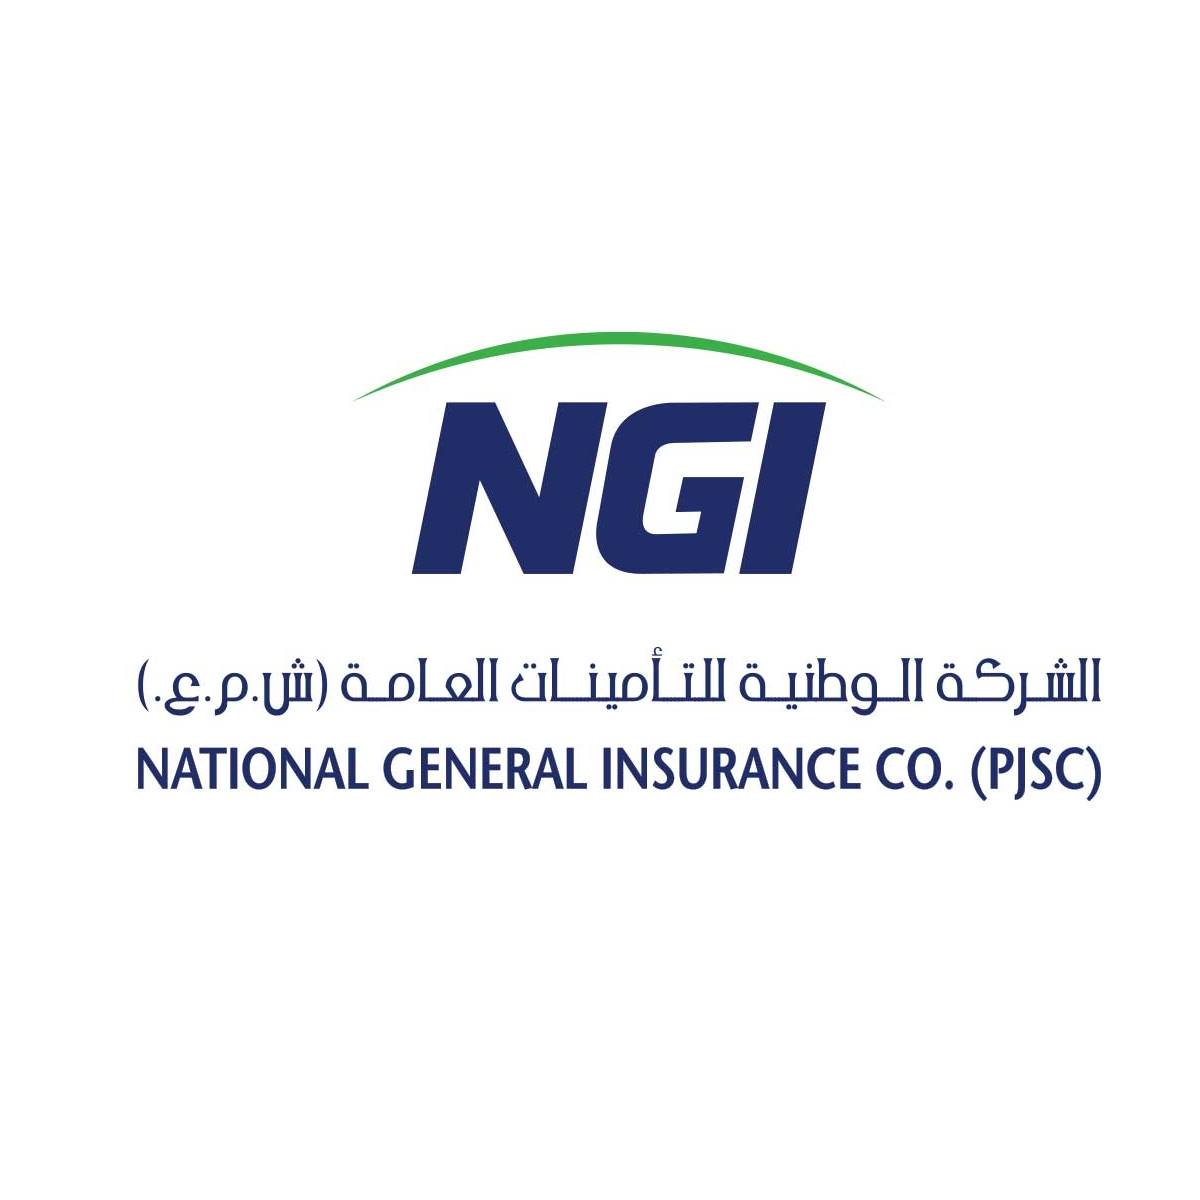 National General Insurance Co. PJSC (NGI)